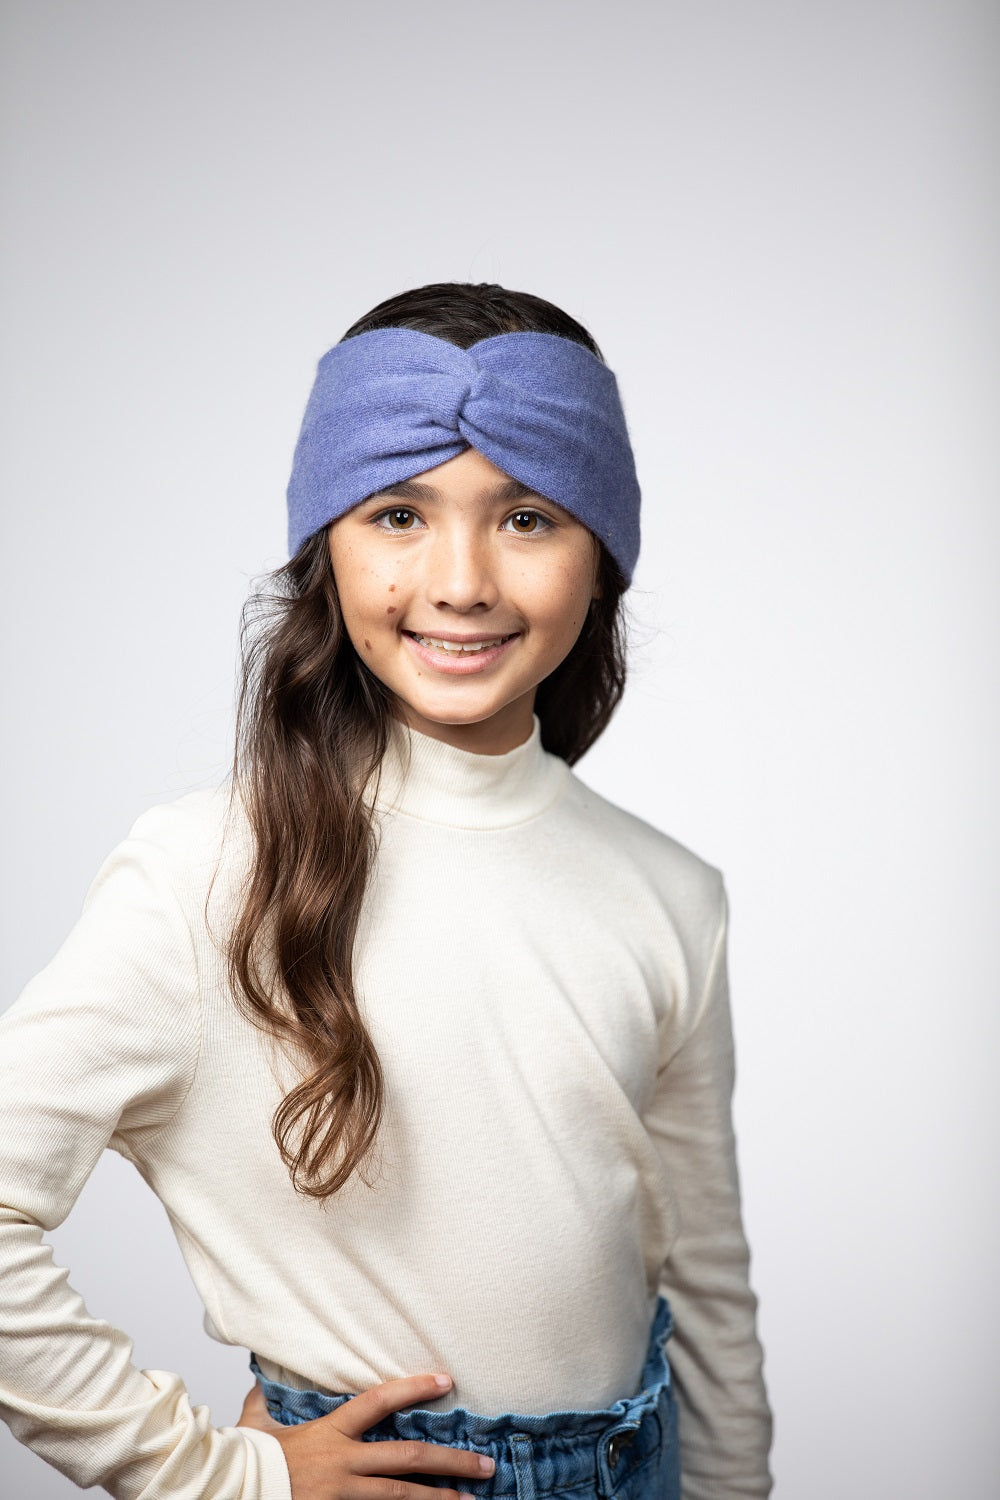 Lavender - Cashmere Headband for Kids